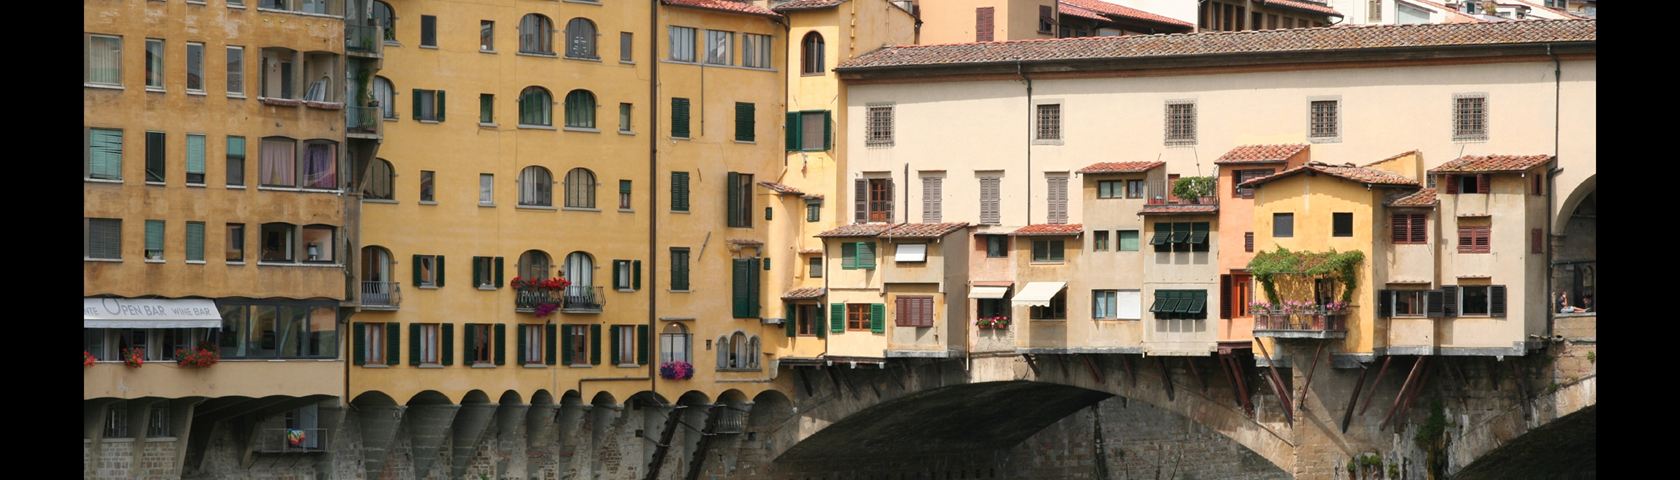 Il Ponte Vecchio, Florence, Italy